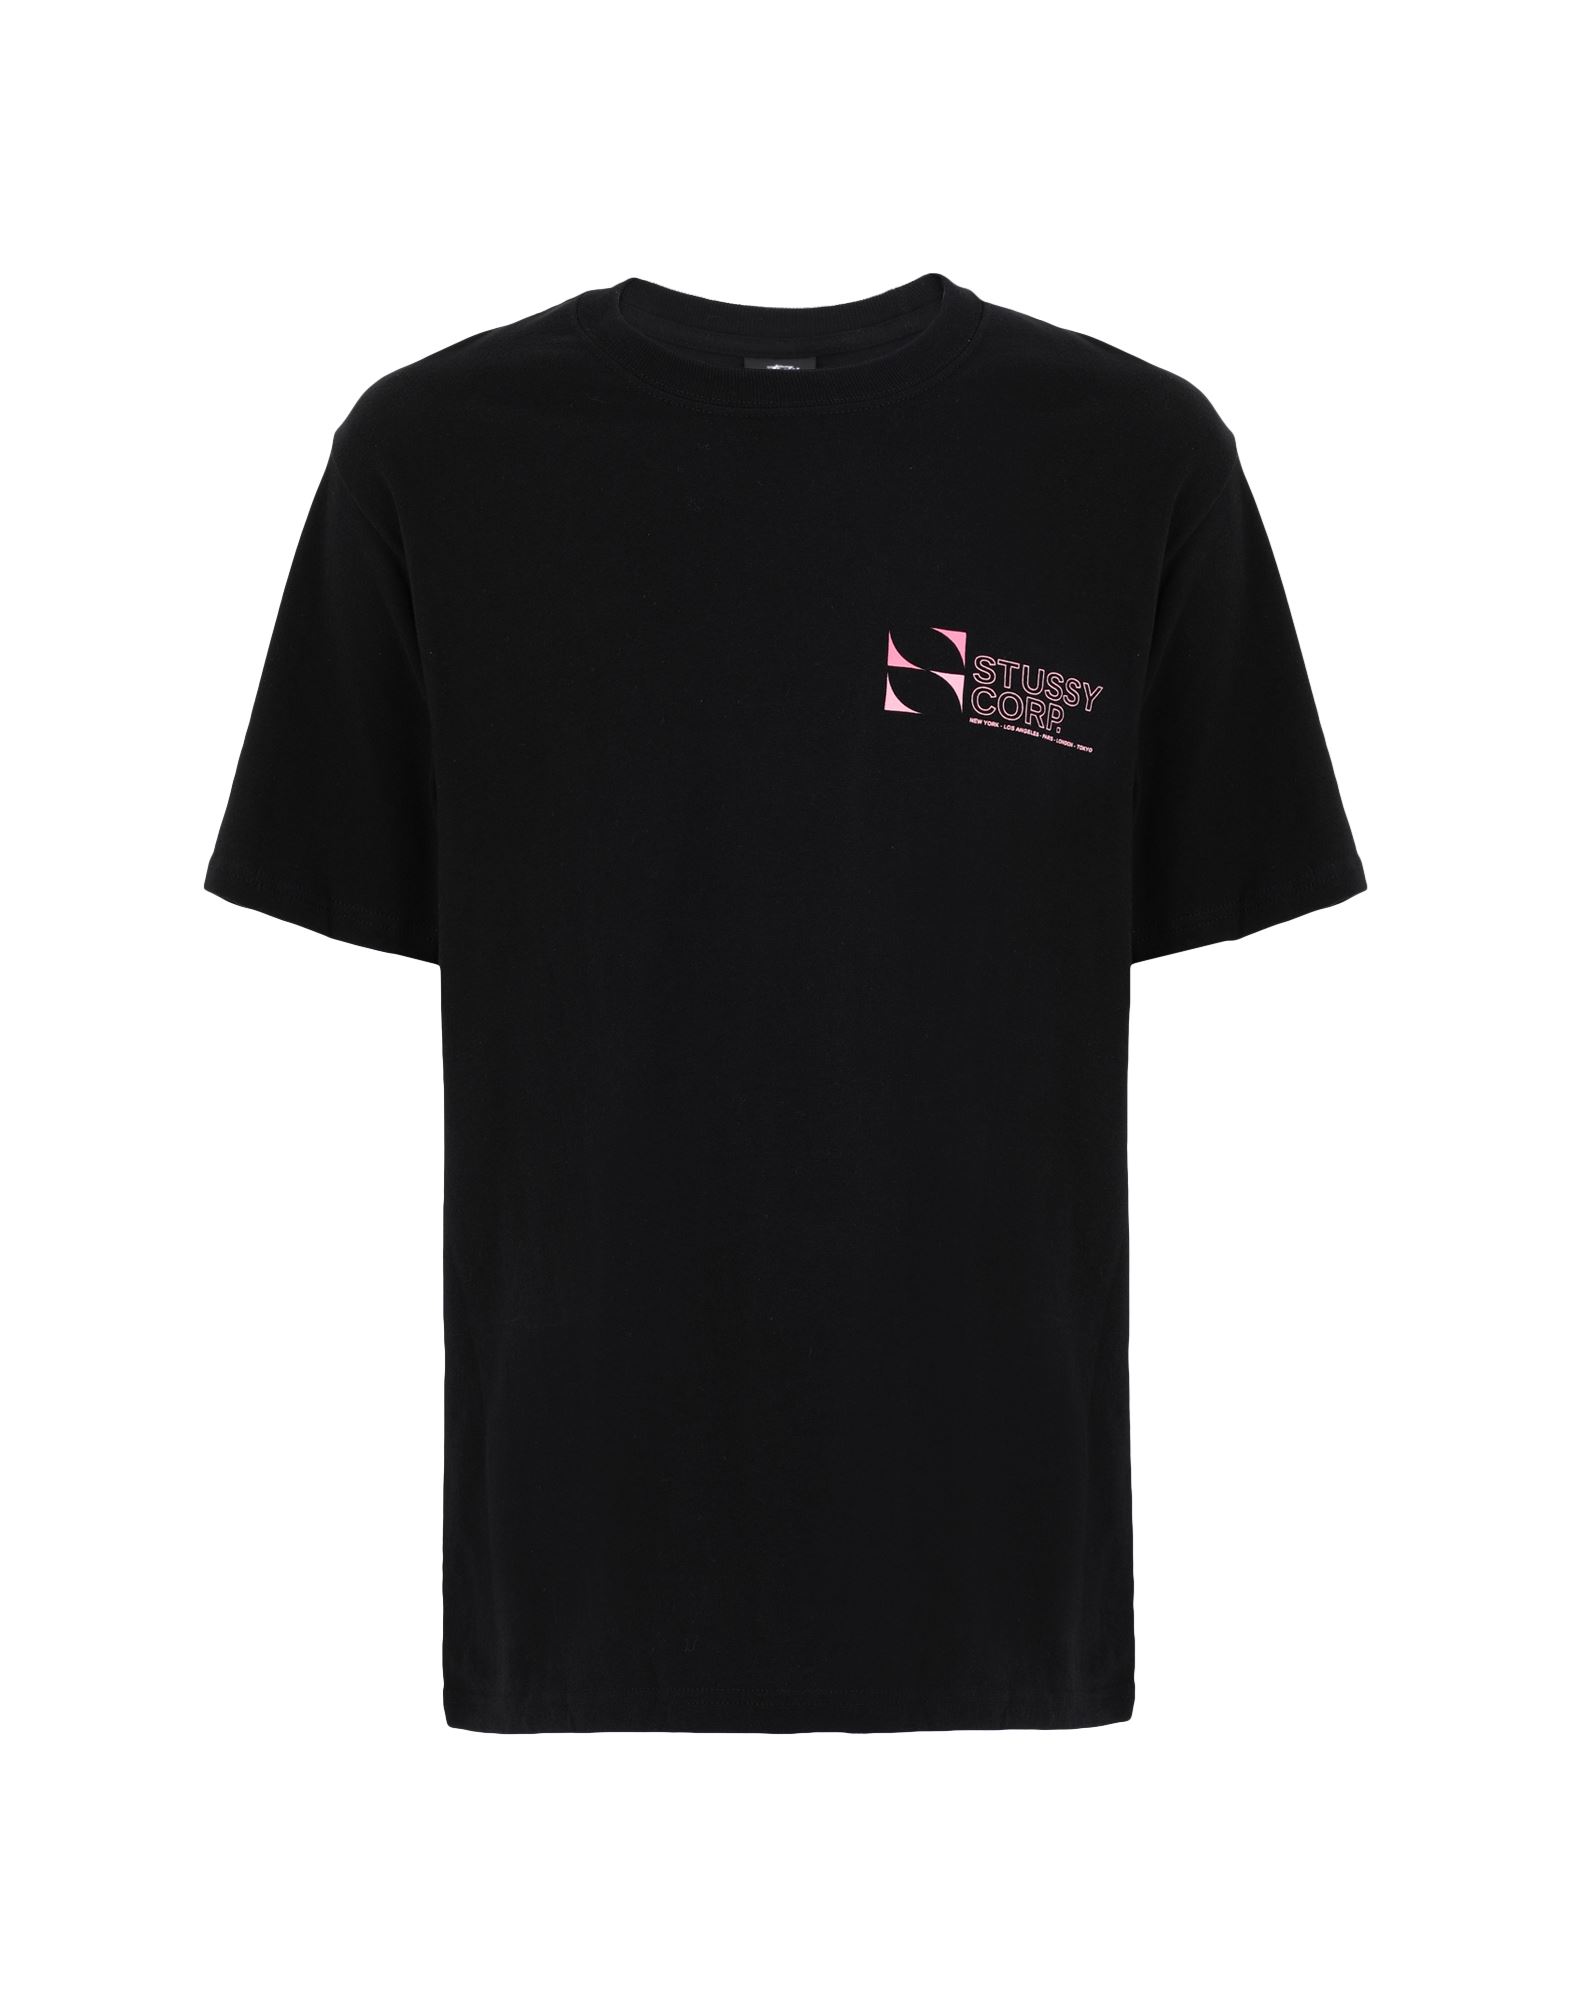 Stussy x Rick Owens футболка.